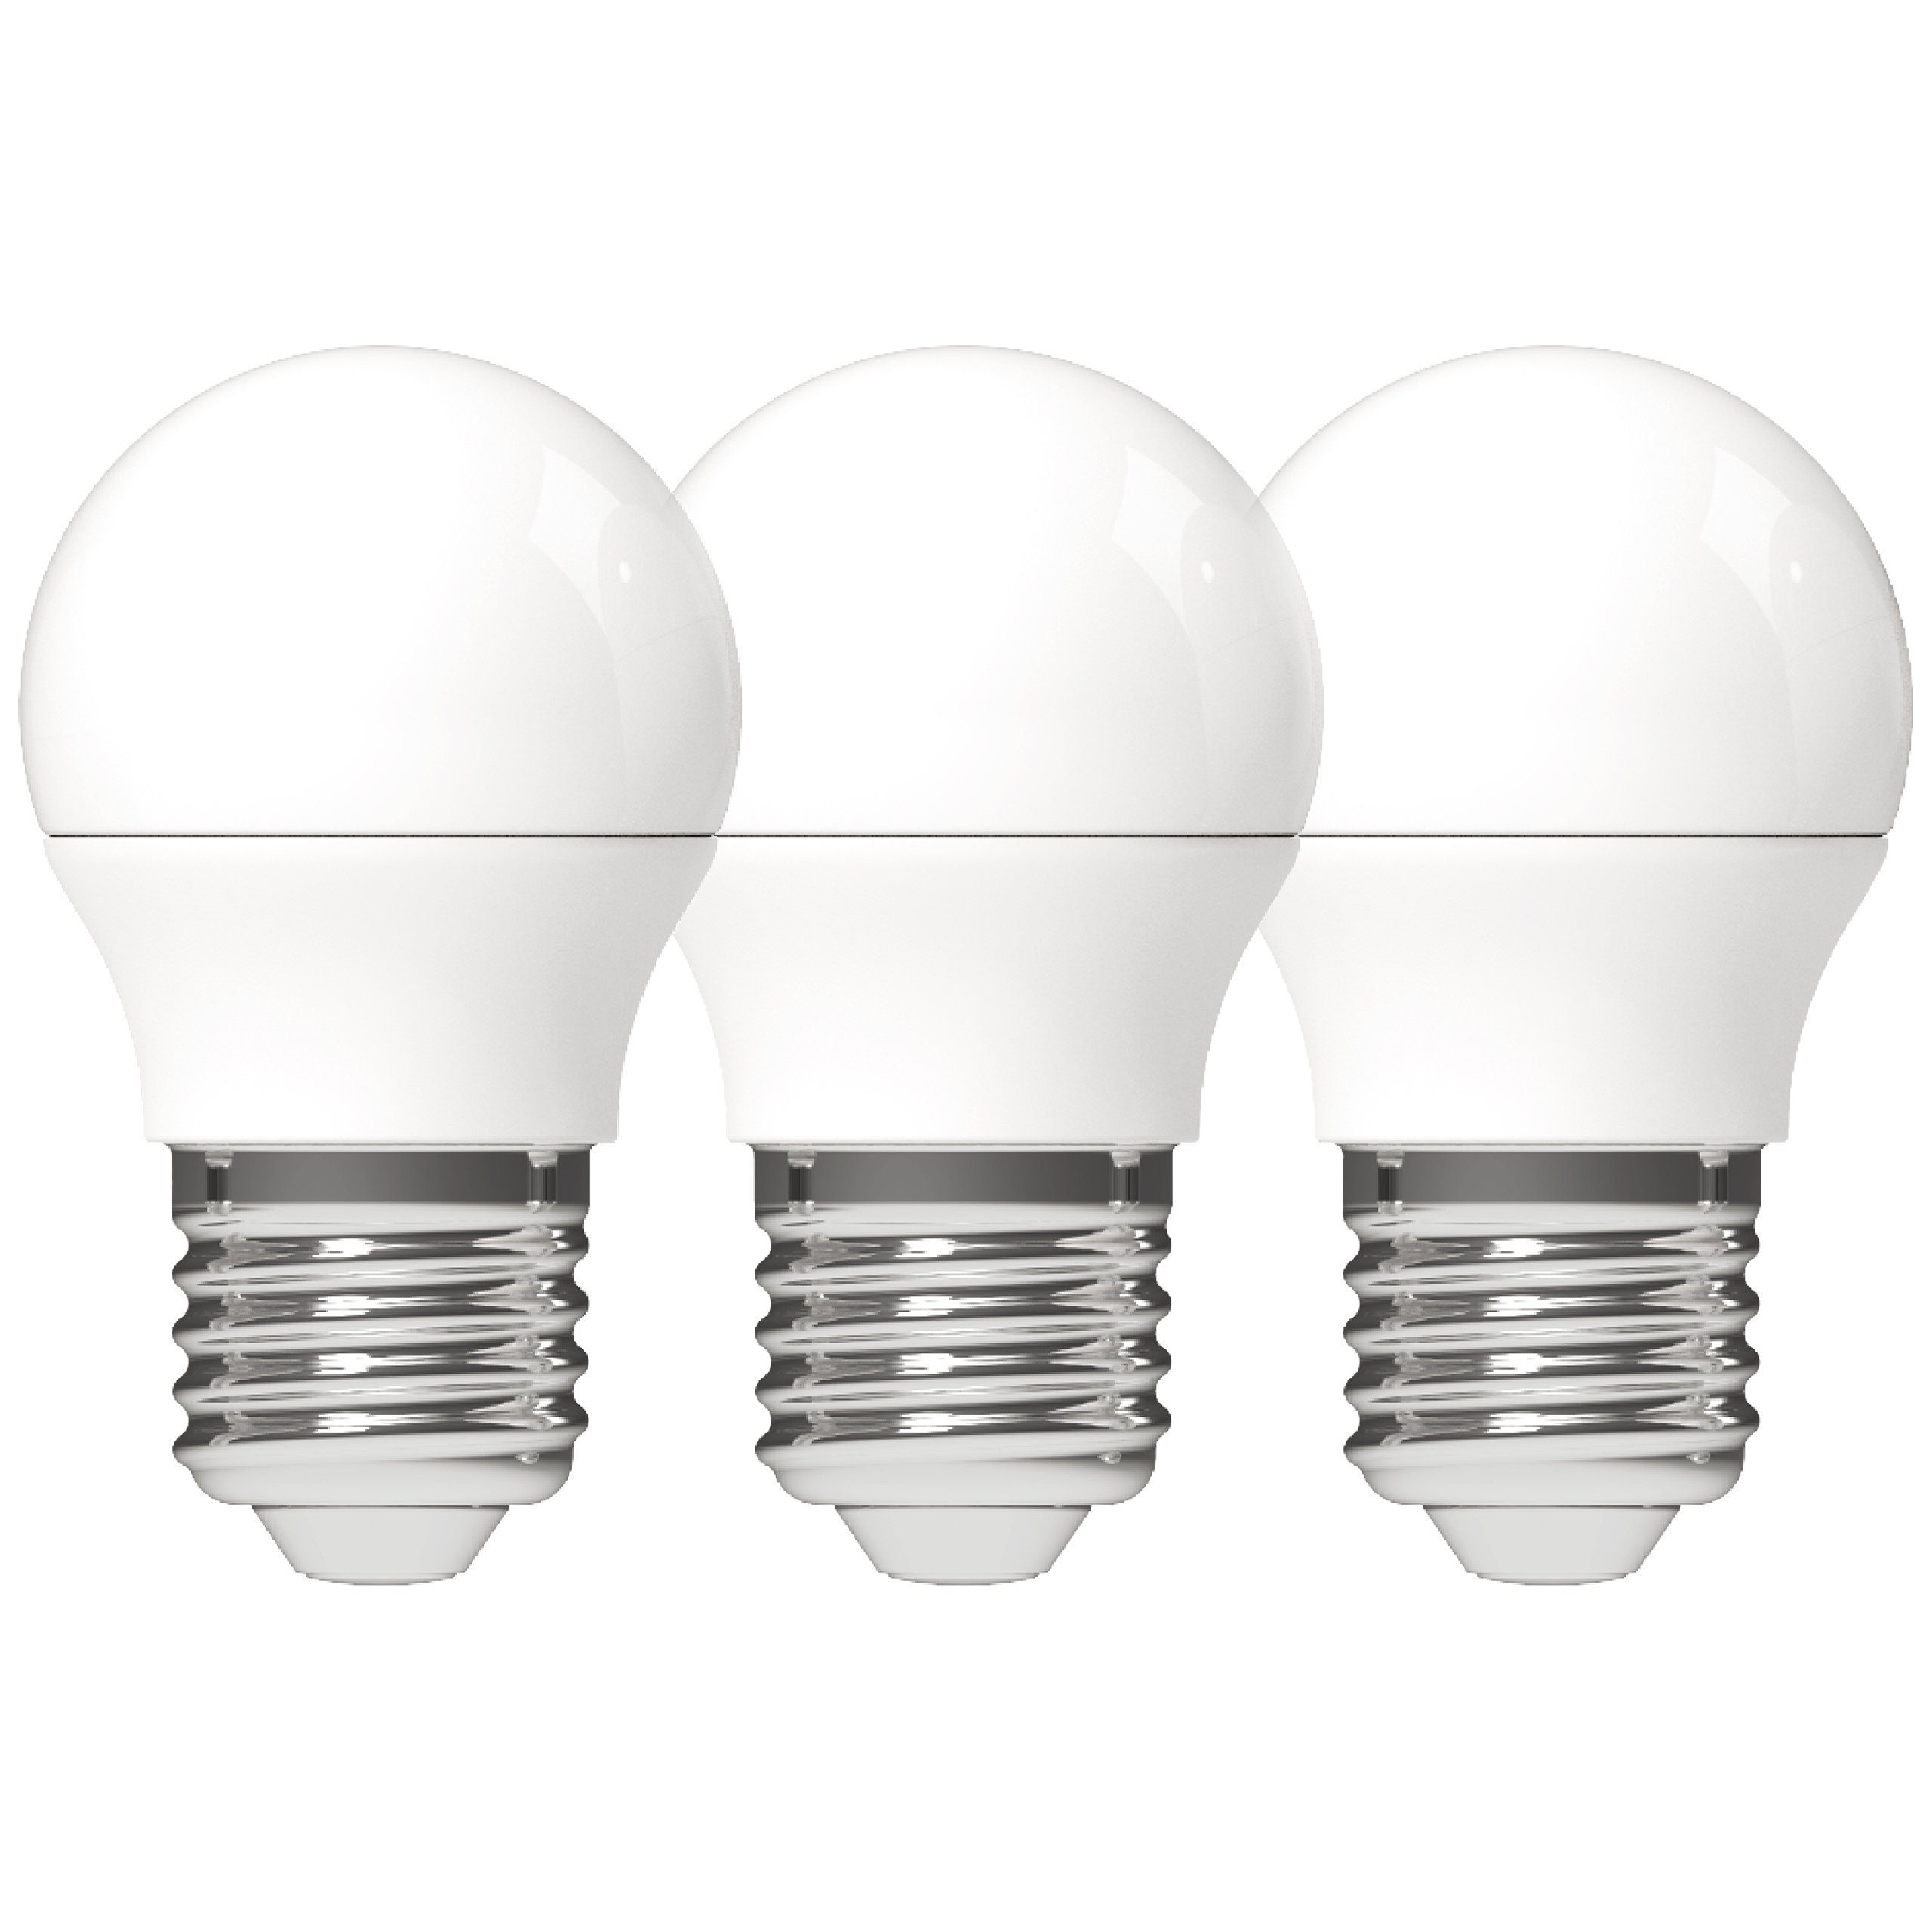 LED's light LED-Leuchtmittel 0620178 LED Kugel, E27, E27 4,9W warmweiß Opal G45 3-Pack | Leuchtmittel